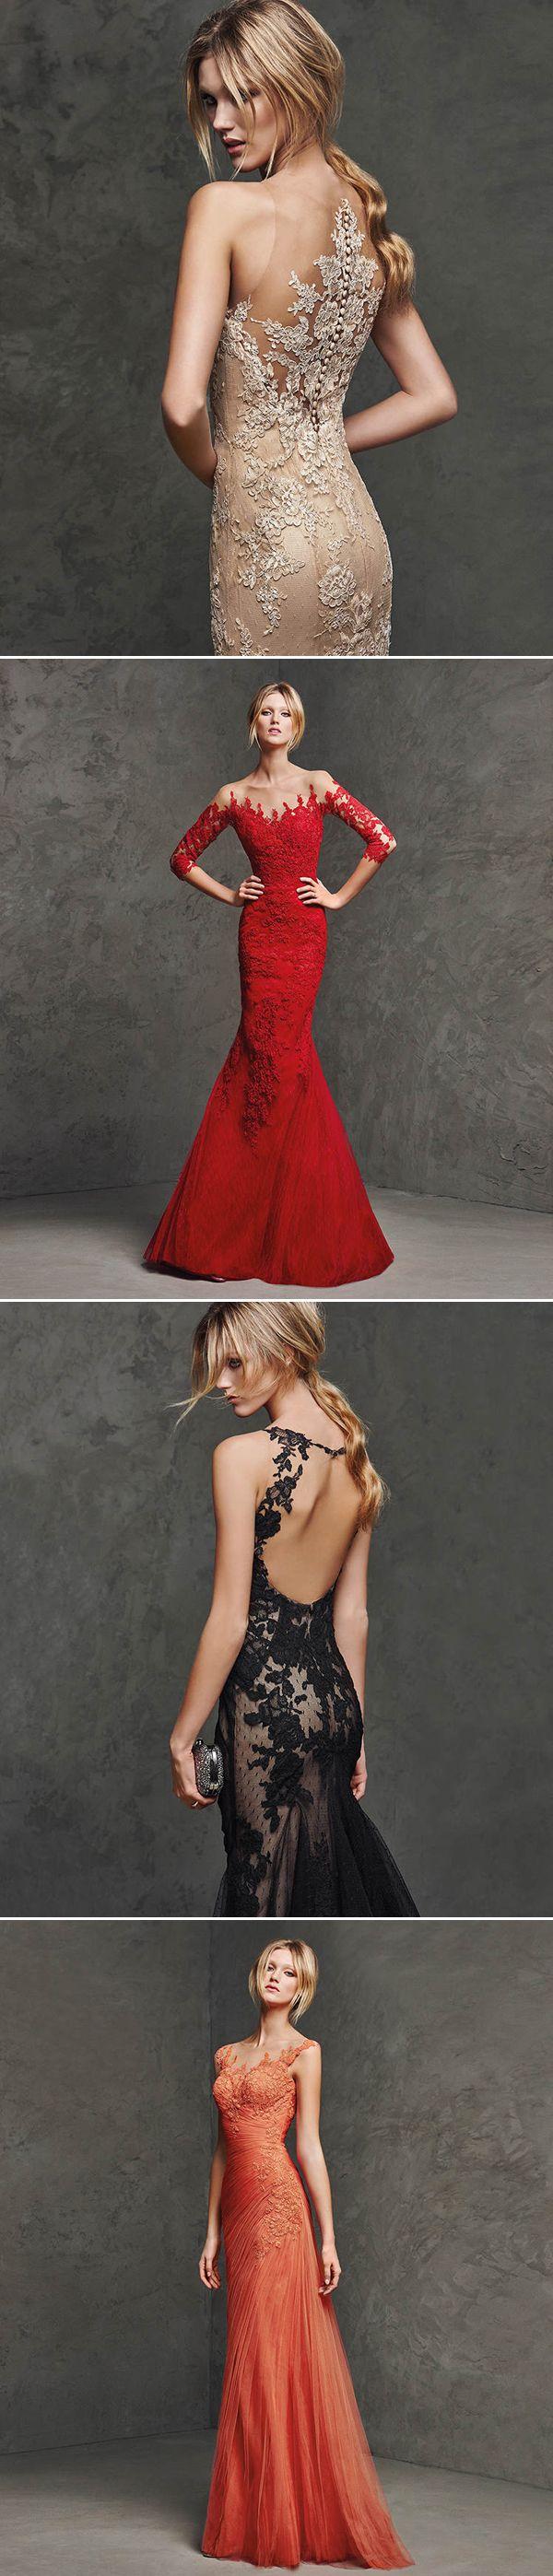 زفاف - Dress To Impress! 32 Stunning Fashion-forward Reception Gowns